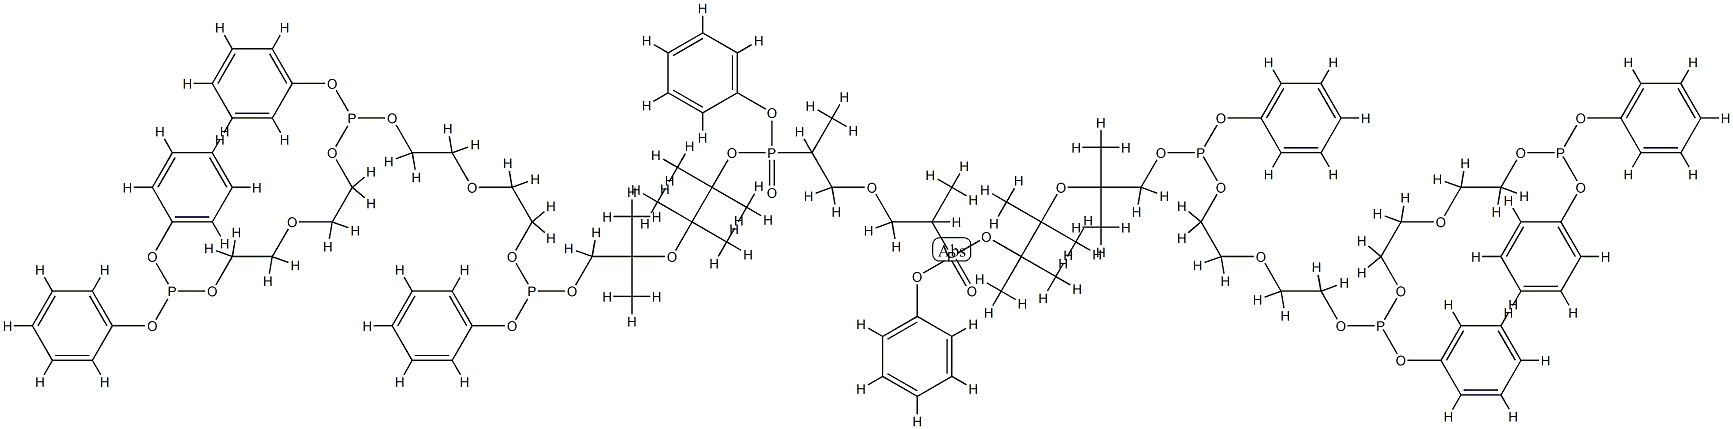 Phosphorous acid, P,P'-[oxybis(methyl-2,1-ethanediyl)] P,P'-bis(hexamethyl-7,15, 23,23-tetraphenoxy-3,6,8,11,14,16,19,22-octaoxa-7 ,15,23-triphosphatricos-1-yl) P,P'-diphenyl ester|